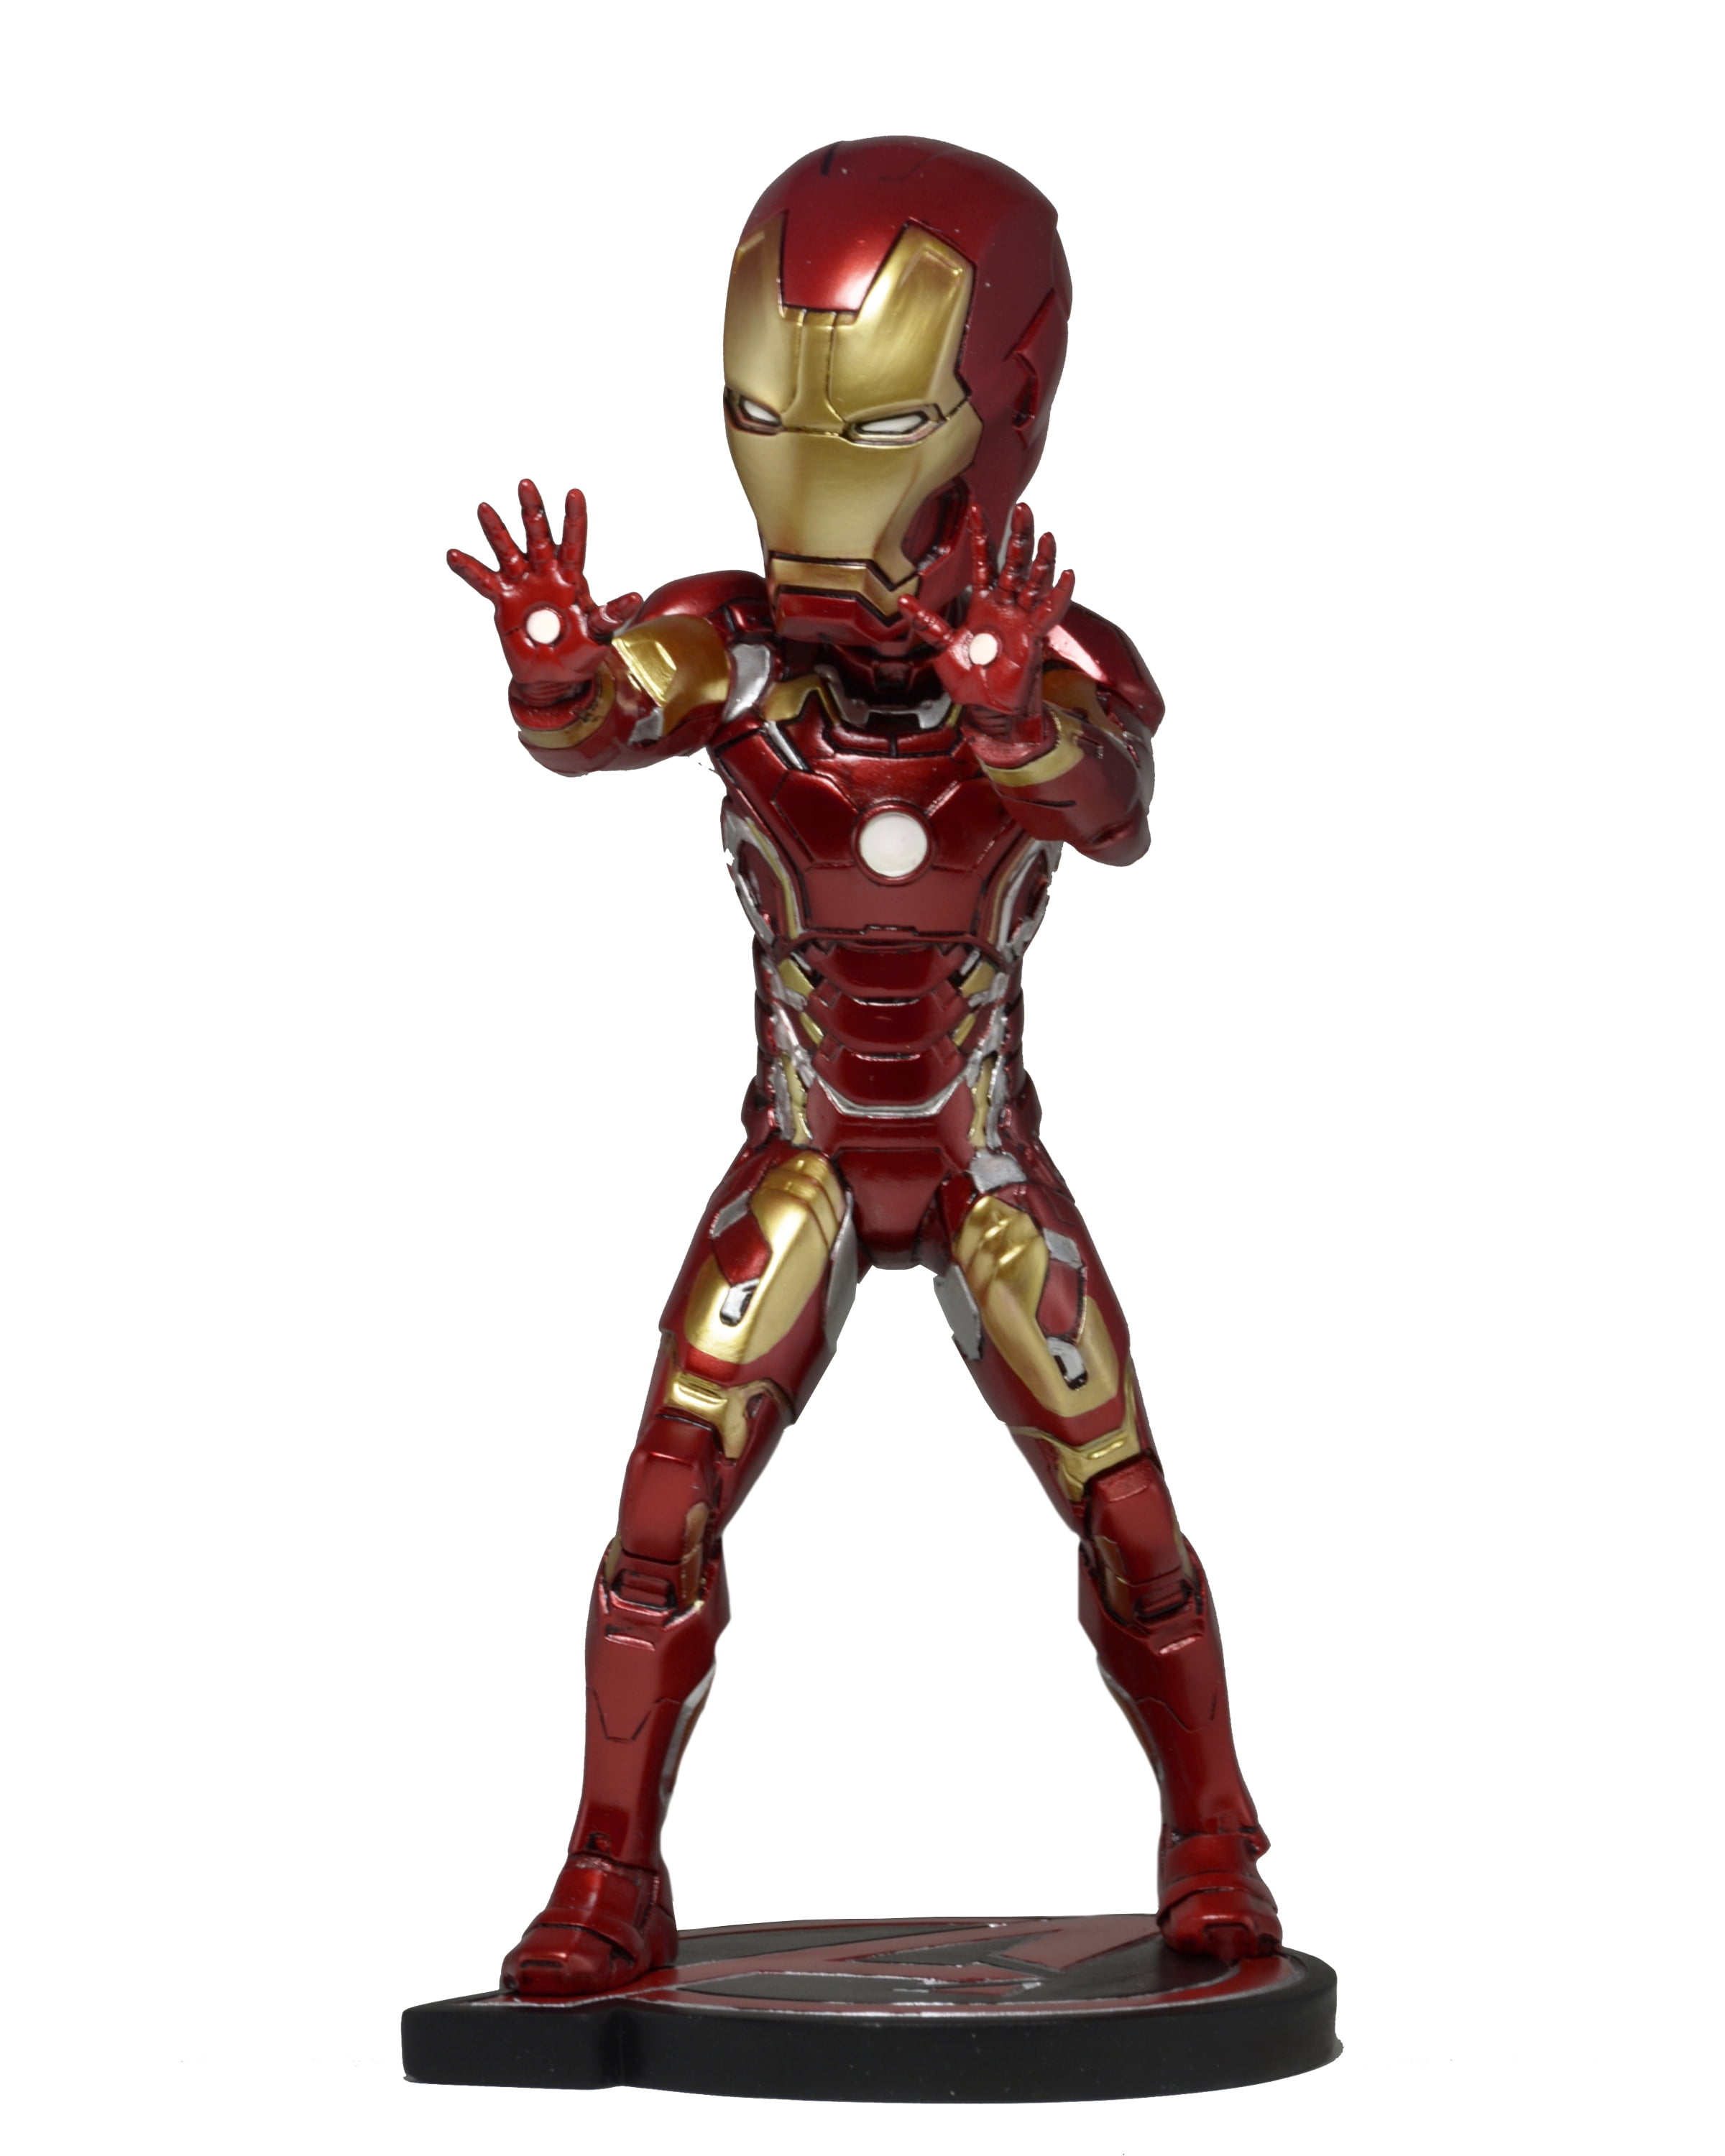 Avengers Ultron   Head Knocker Studio   Ironman